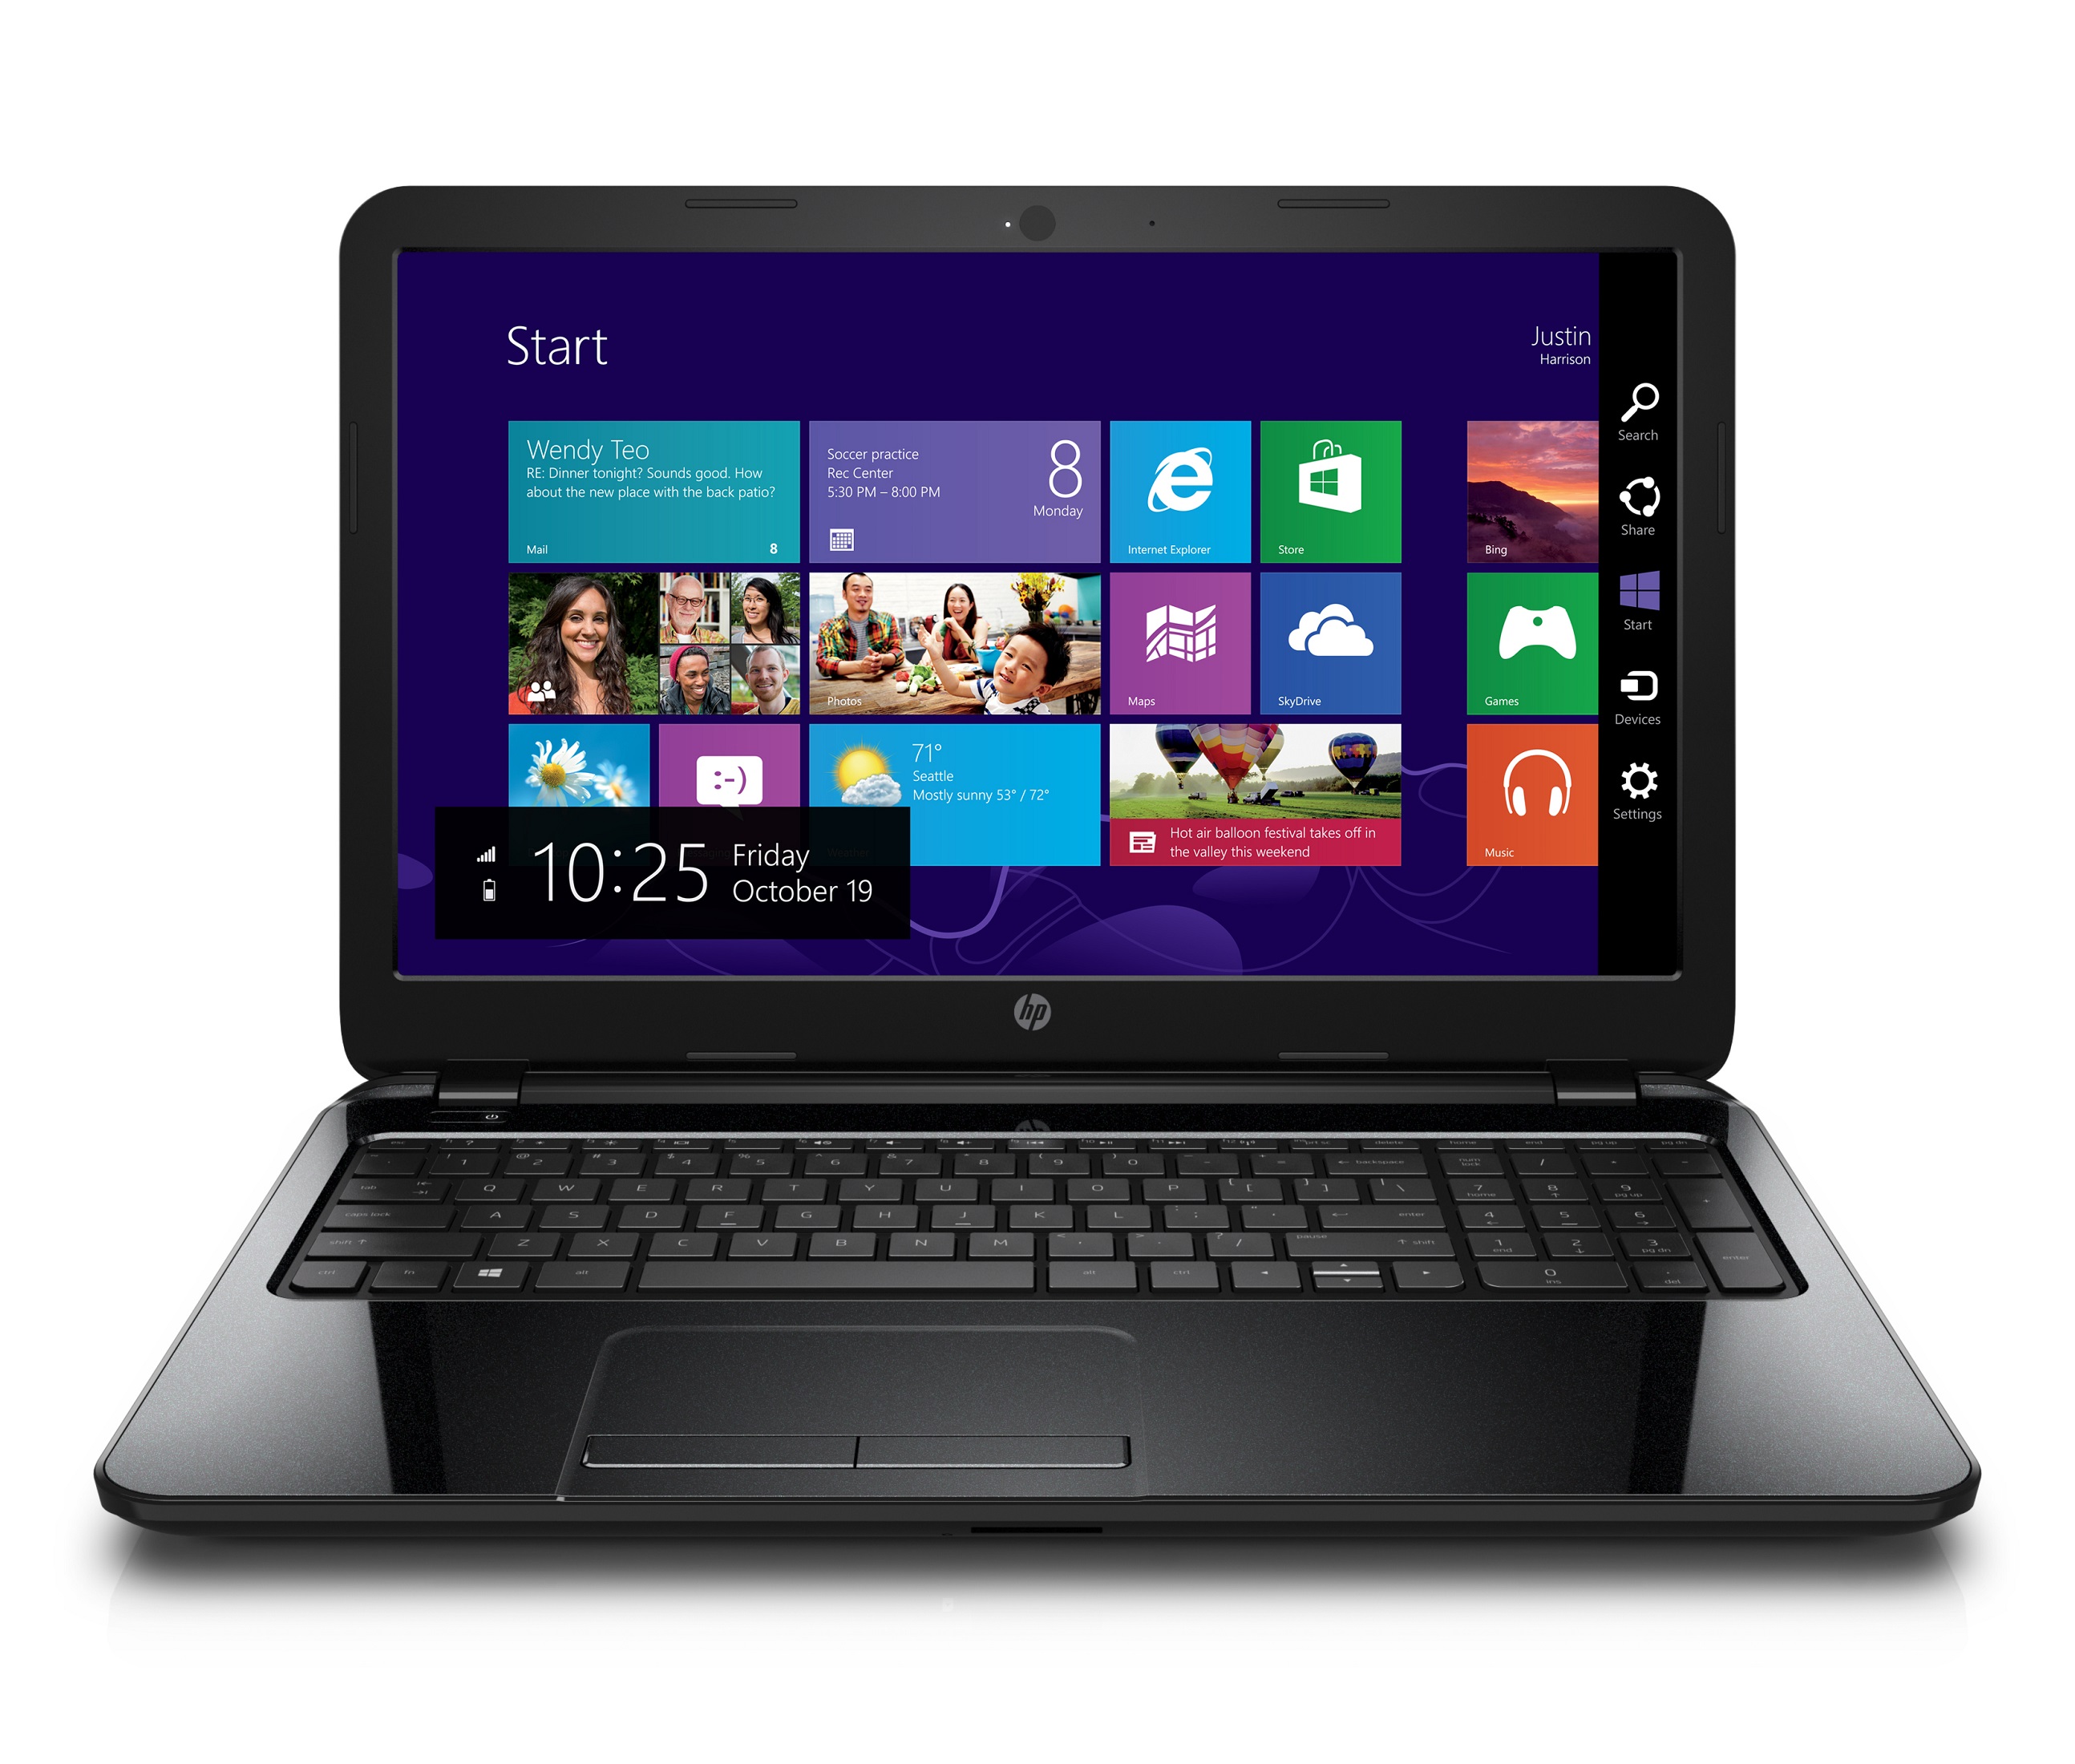 HP 15-g039wm 15.6" Notebook with AMD A8-6410 Processor & Windows 8.1